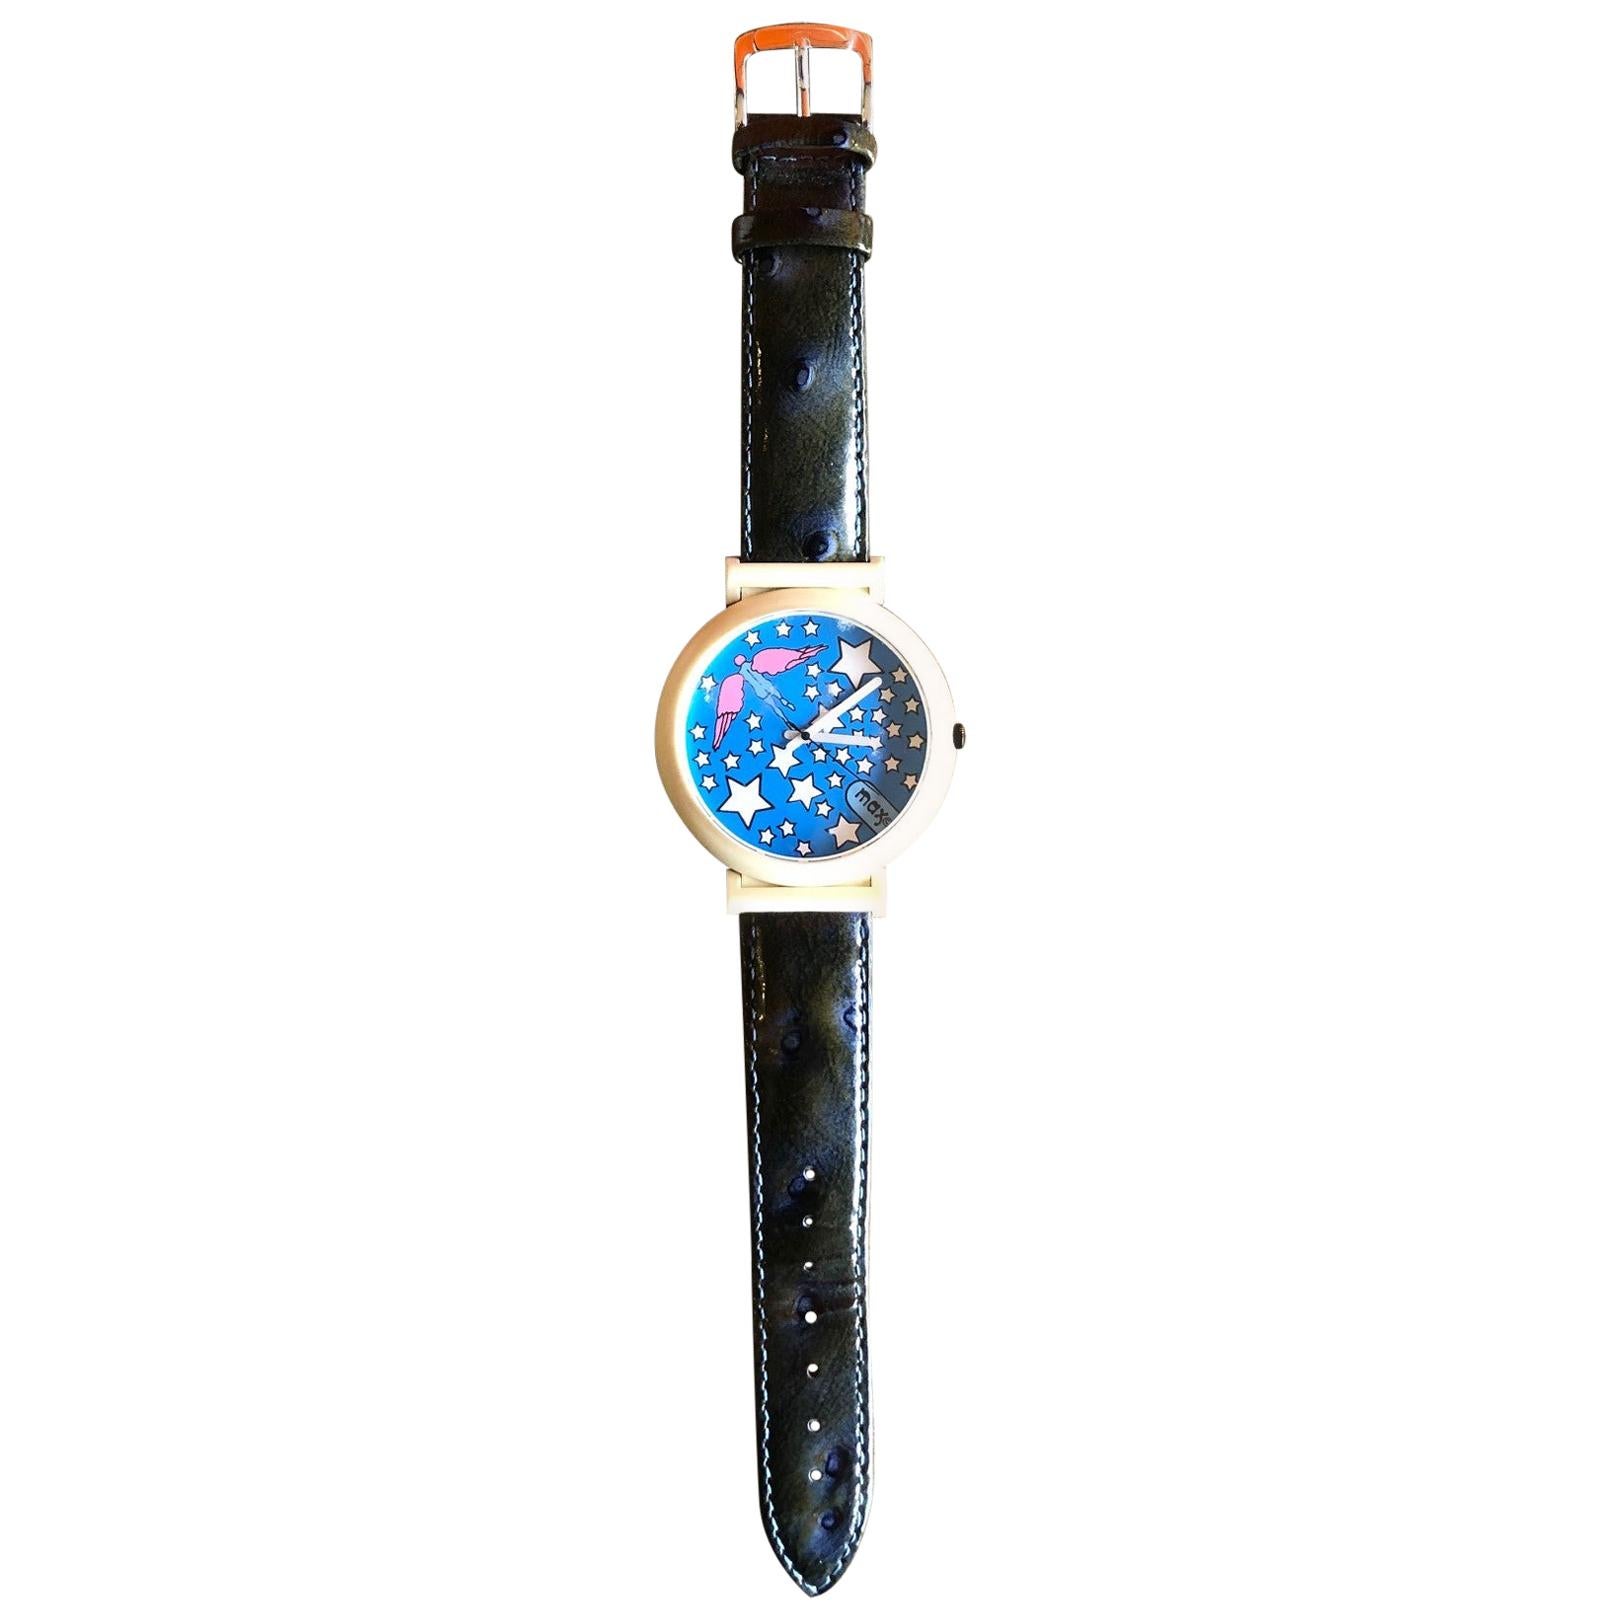 Peter Max Pop Art Wristwatch For Sale